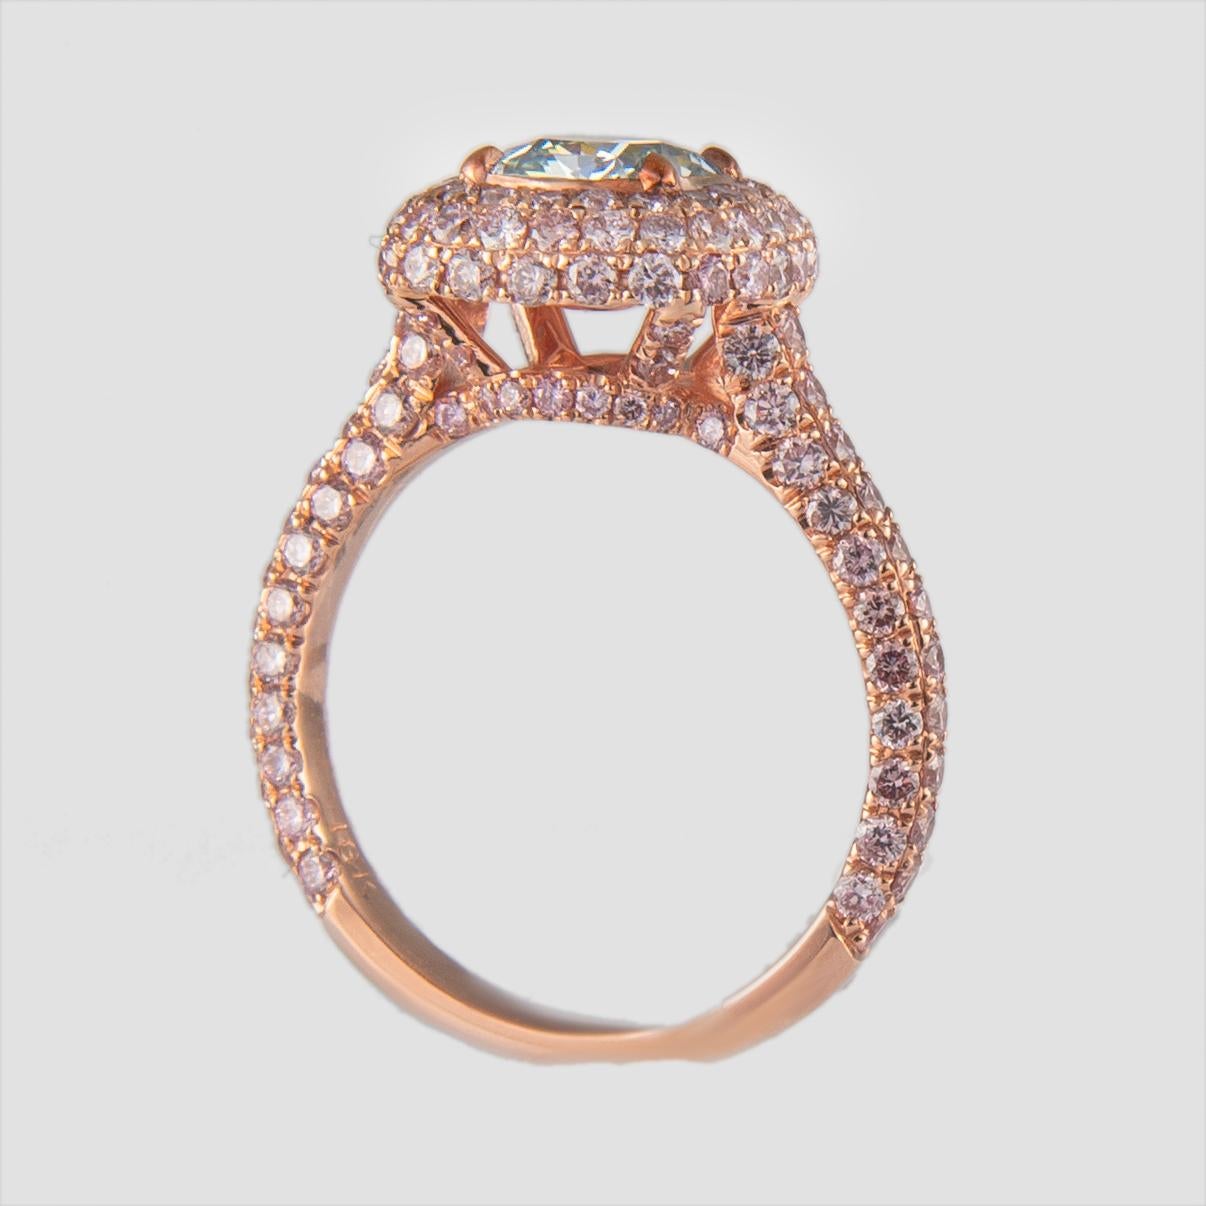 Alexander GIA - Diamant vert bleuté clair fantaisie de 1,38 carat avec diamants roses fantaisie en vente 1